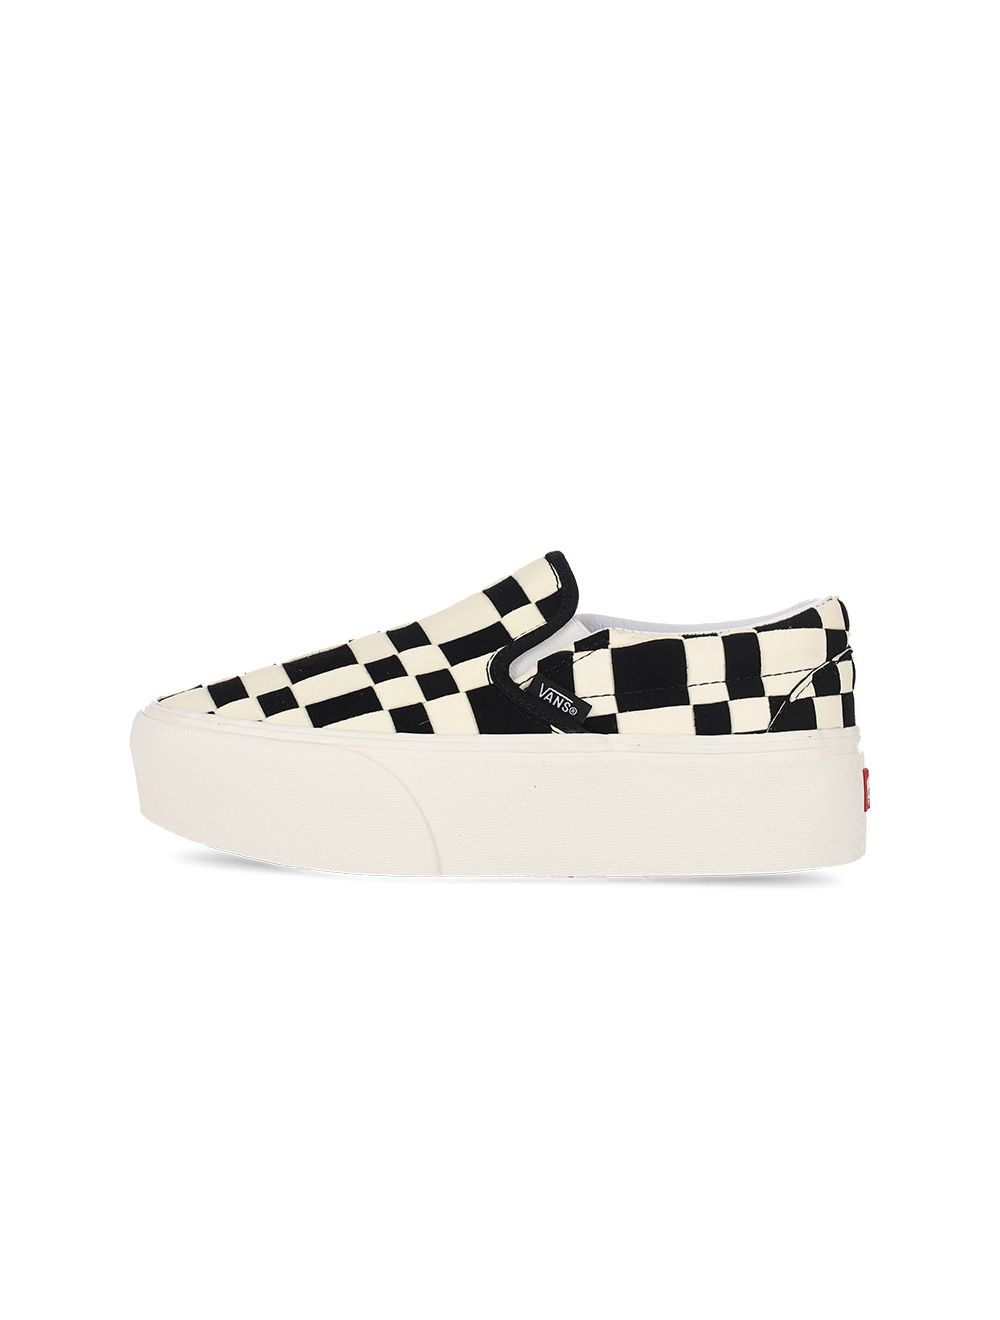 Vans Classic Slip On Stackform Sneaker Womens Checkered Black